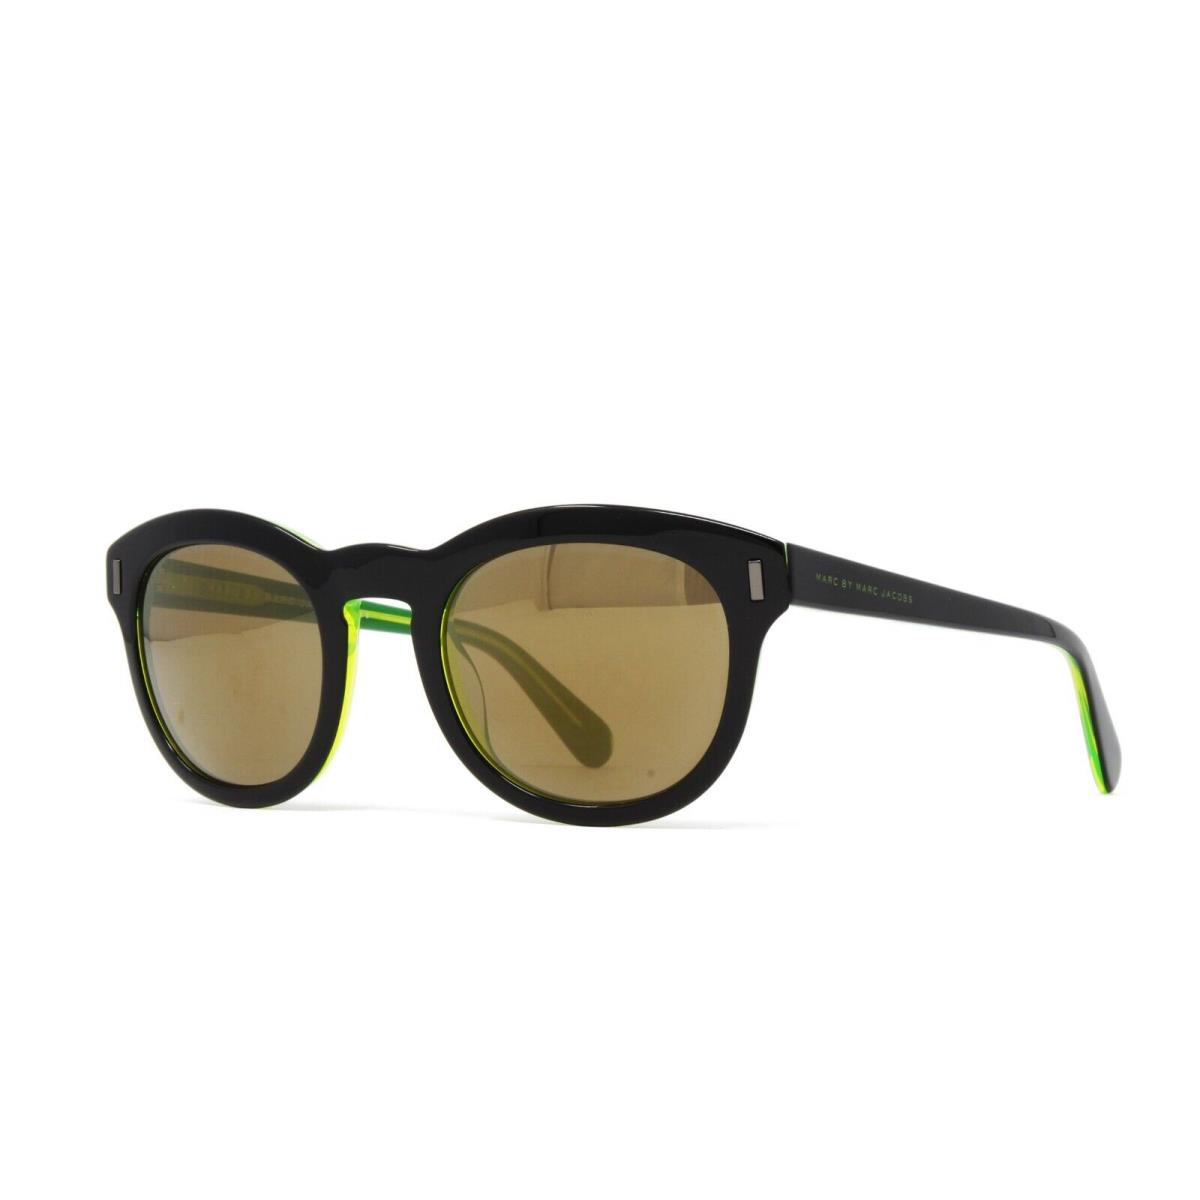 Marc by Marc Jacobs Women`s Round Sunglasses MMJ433S/07ZJ Black Green 49mm